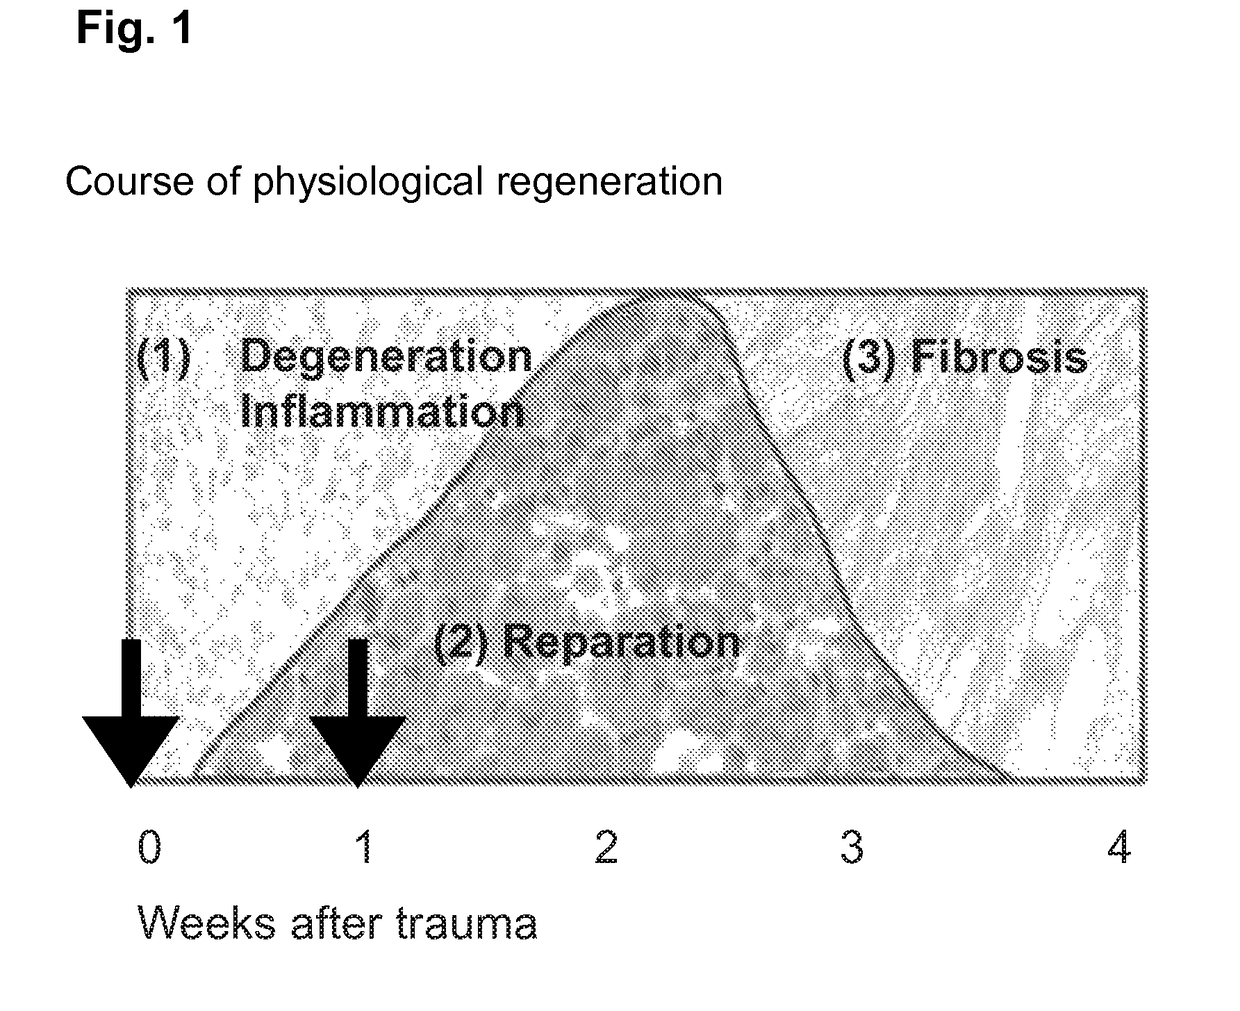 Skeletal muscle regeneration using mesenchymal system cells